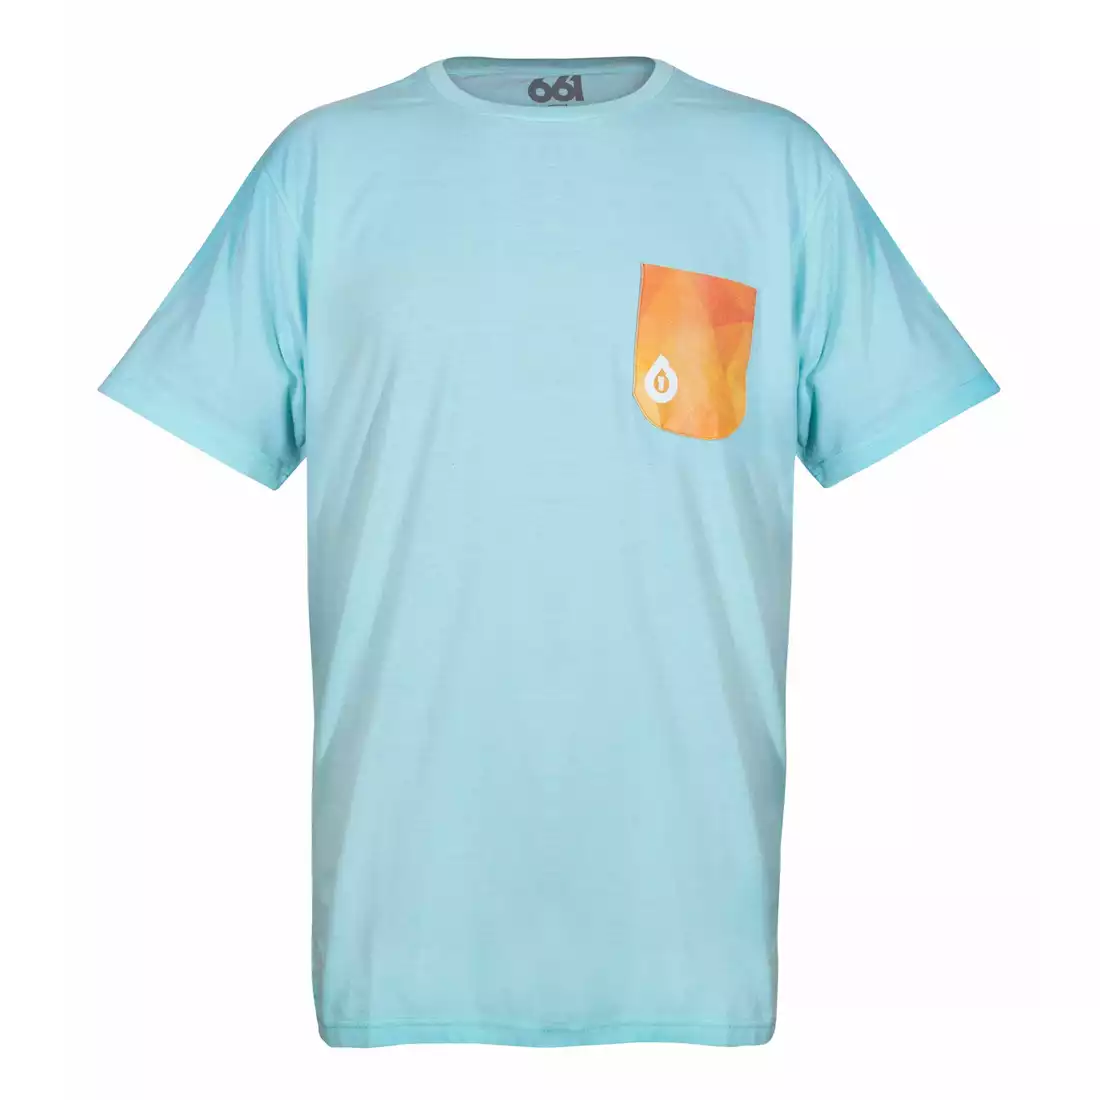 661 GEO POCKET Tee Pánske tričko, Modrá